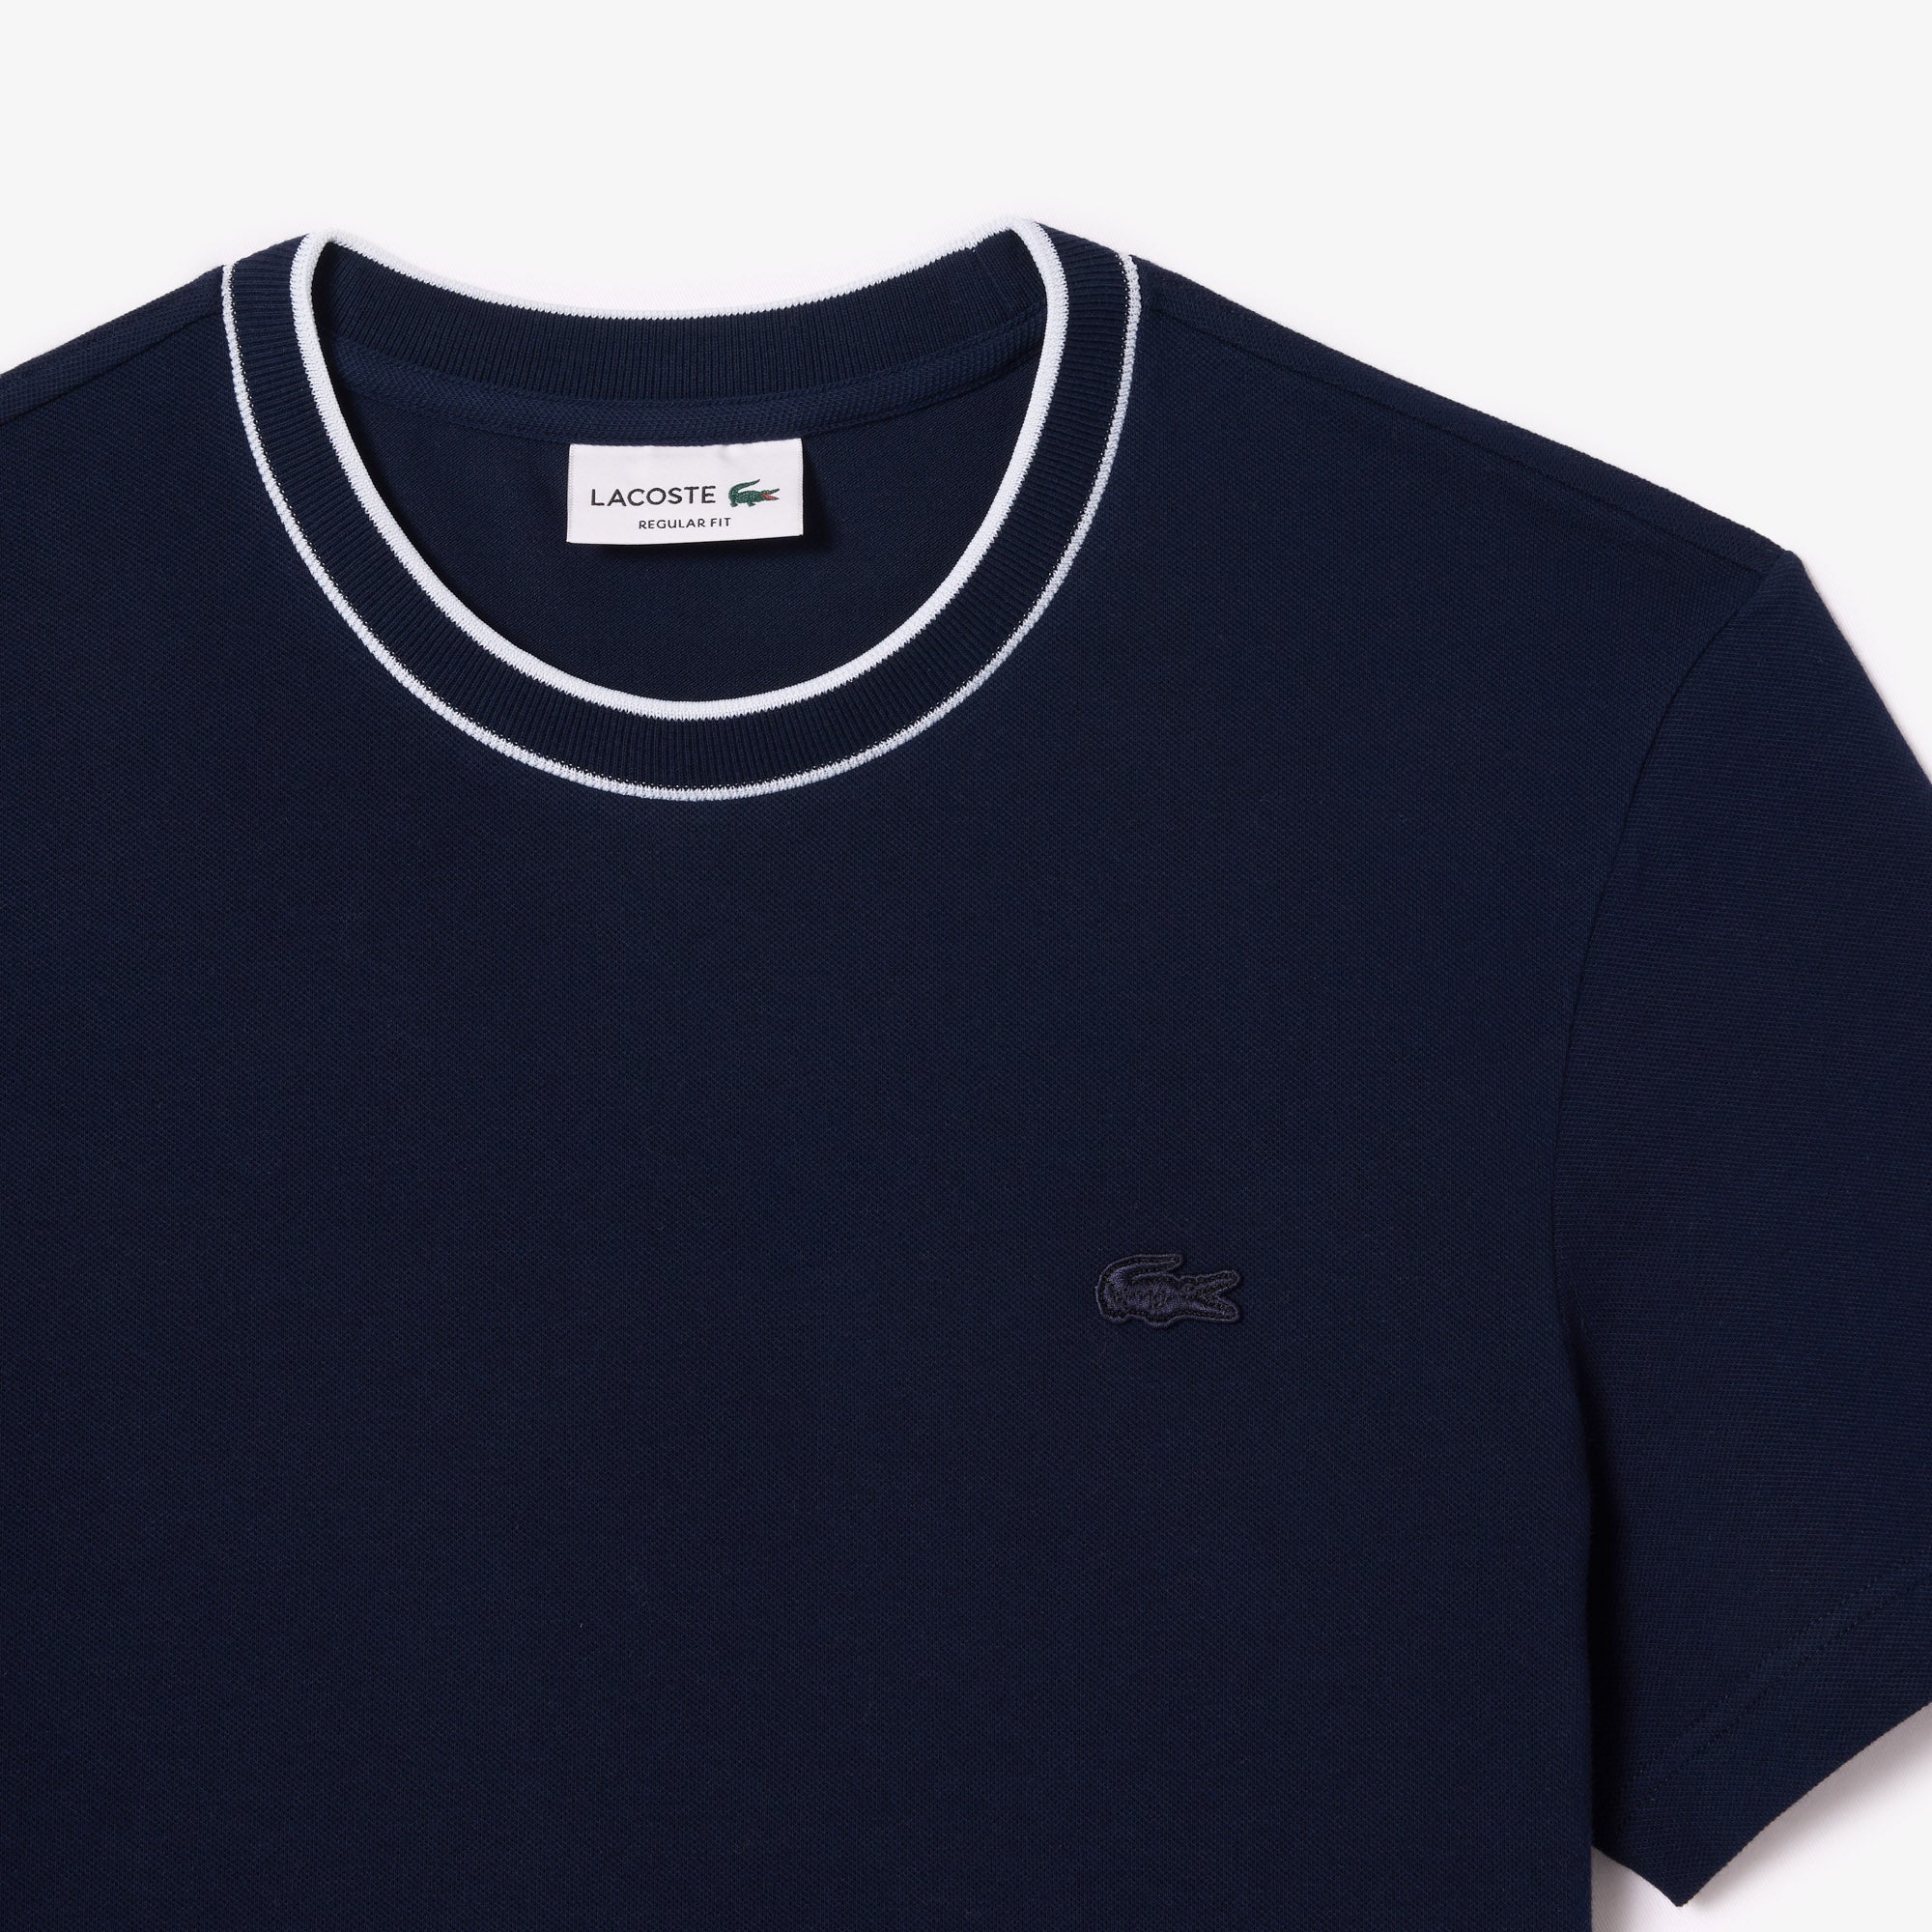 LACOSTE T-Shirt Uomo Colletto Righe-Blu Navy